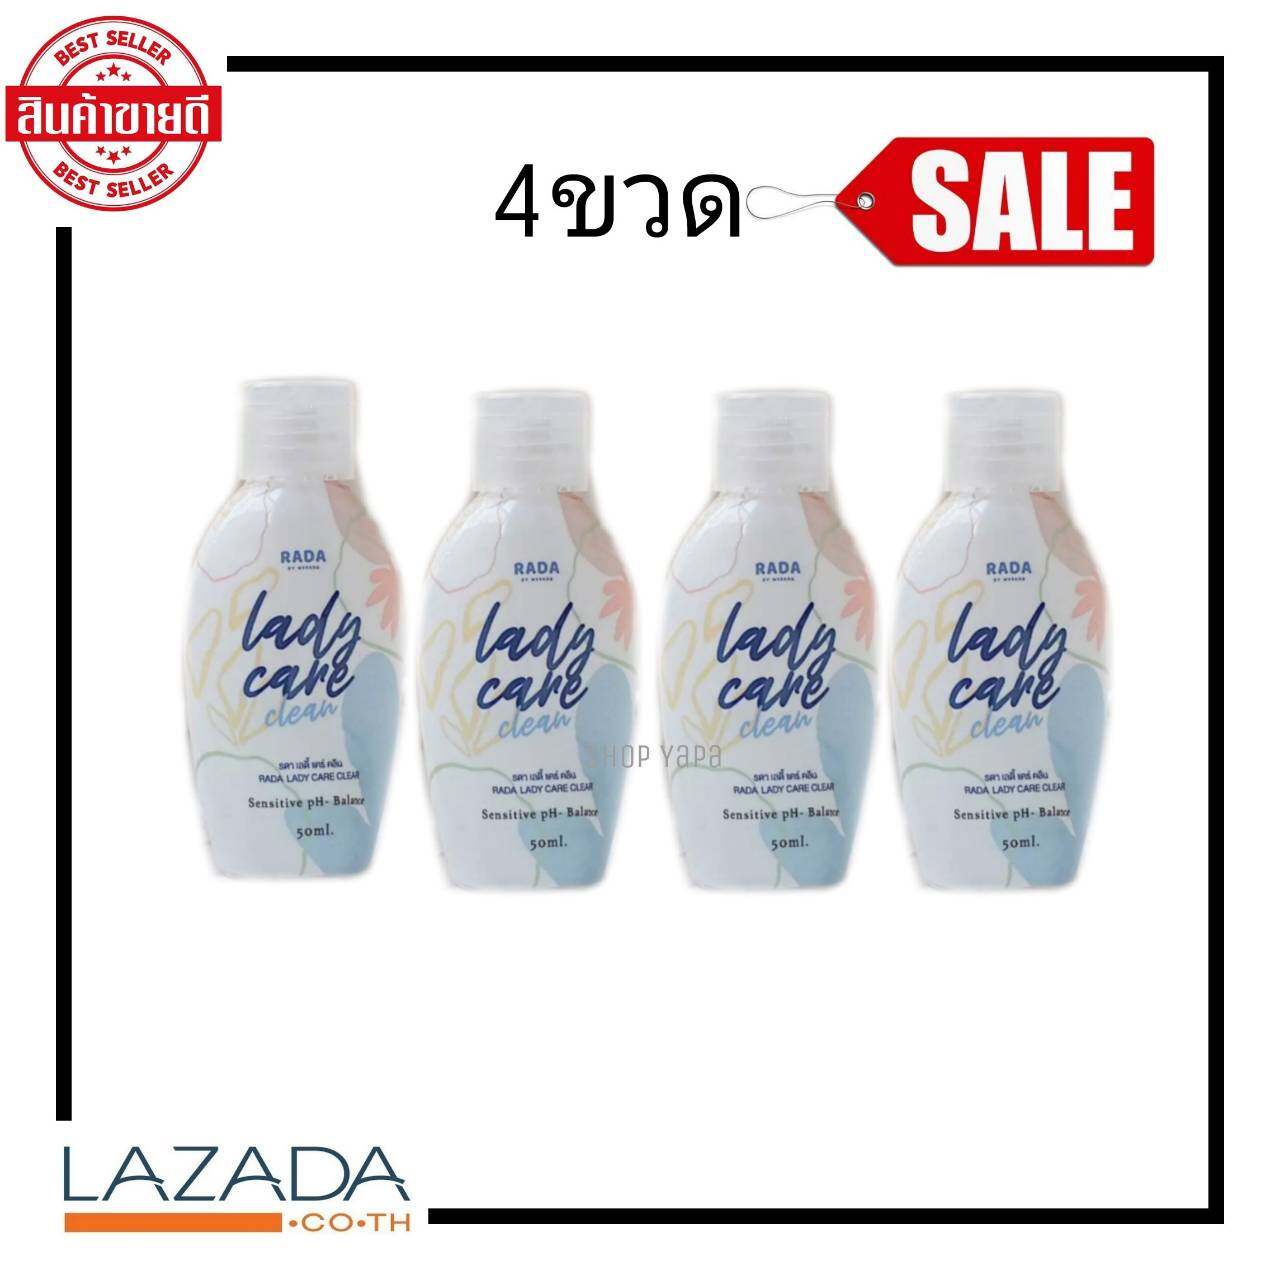 RADA Lady Care Clean รดาเลดี้เเคร์ ผลิตภัณฑ์ ทำความสะอาดจุดซ่อนเร้น ปริมาณ 50 ml ( จำนวน 4 ชิ้น )